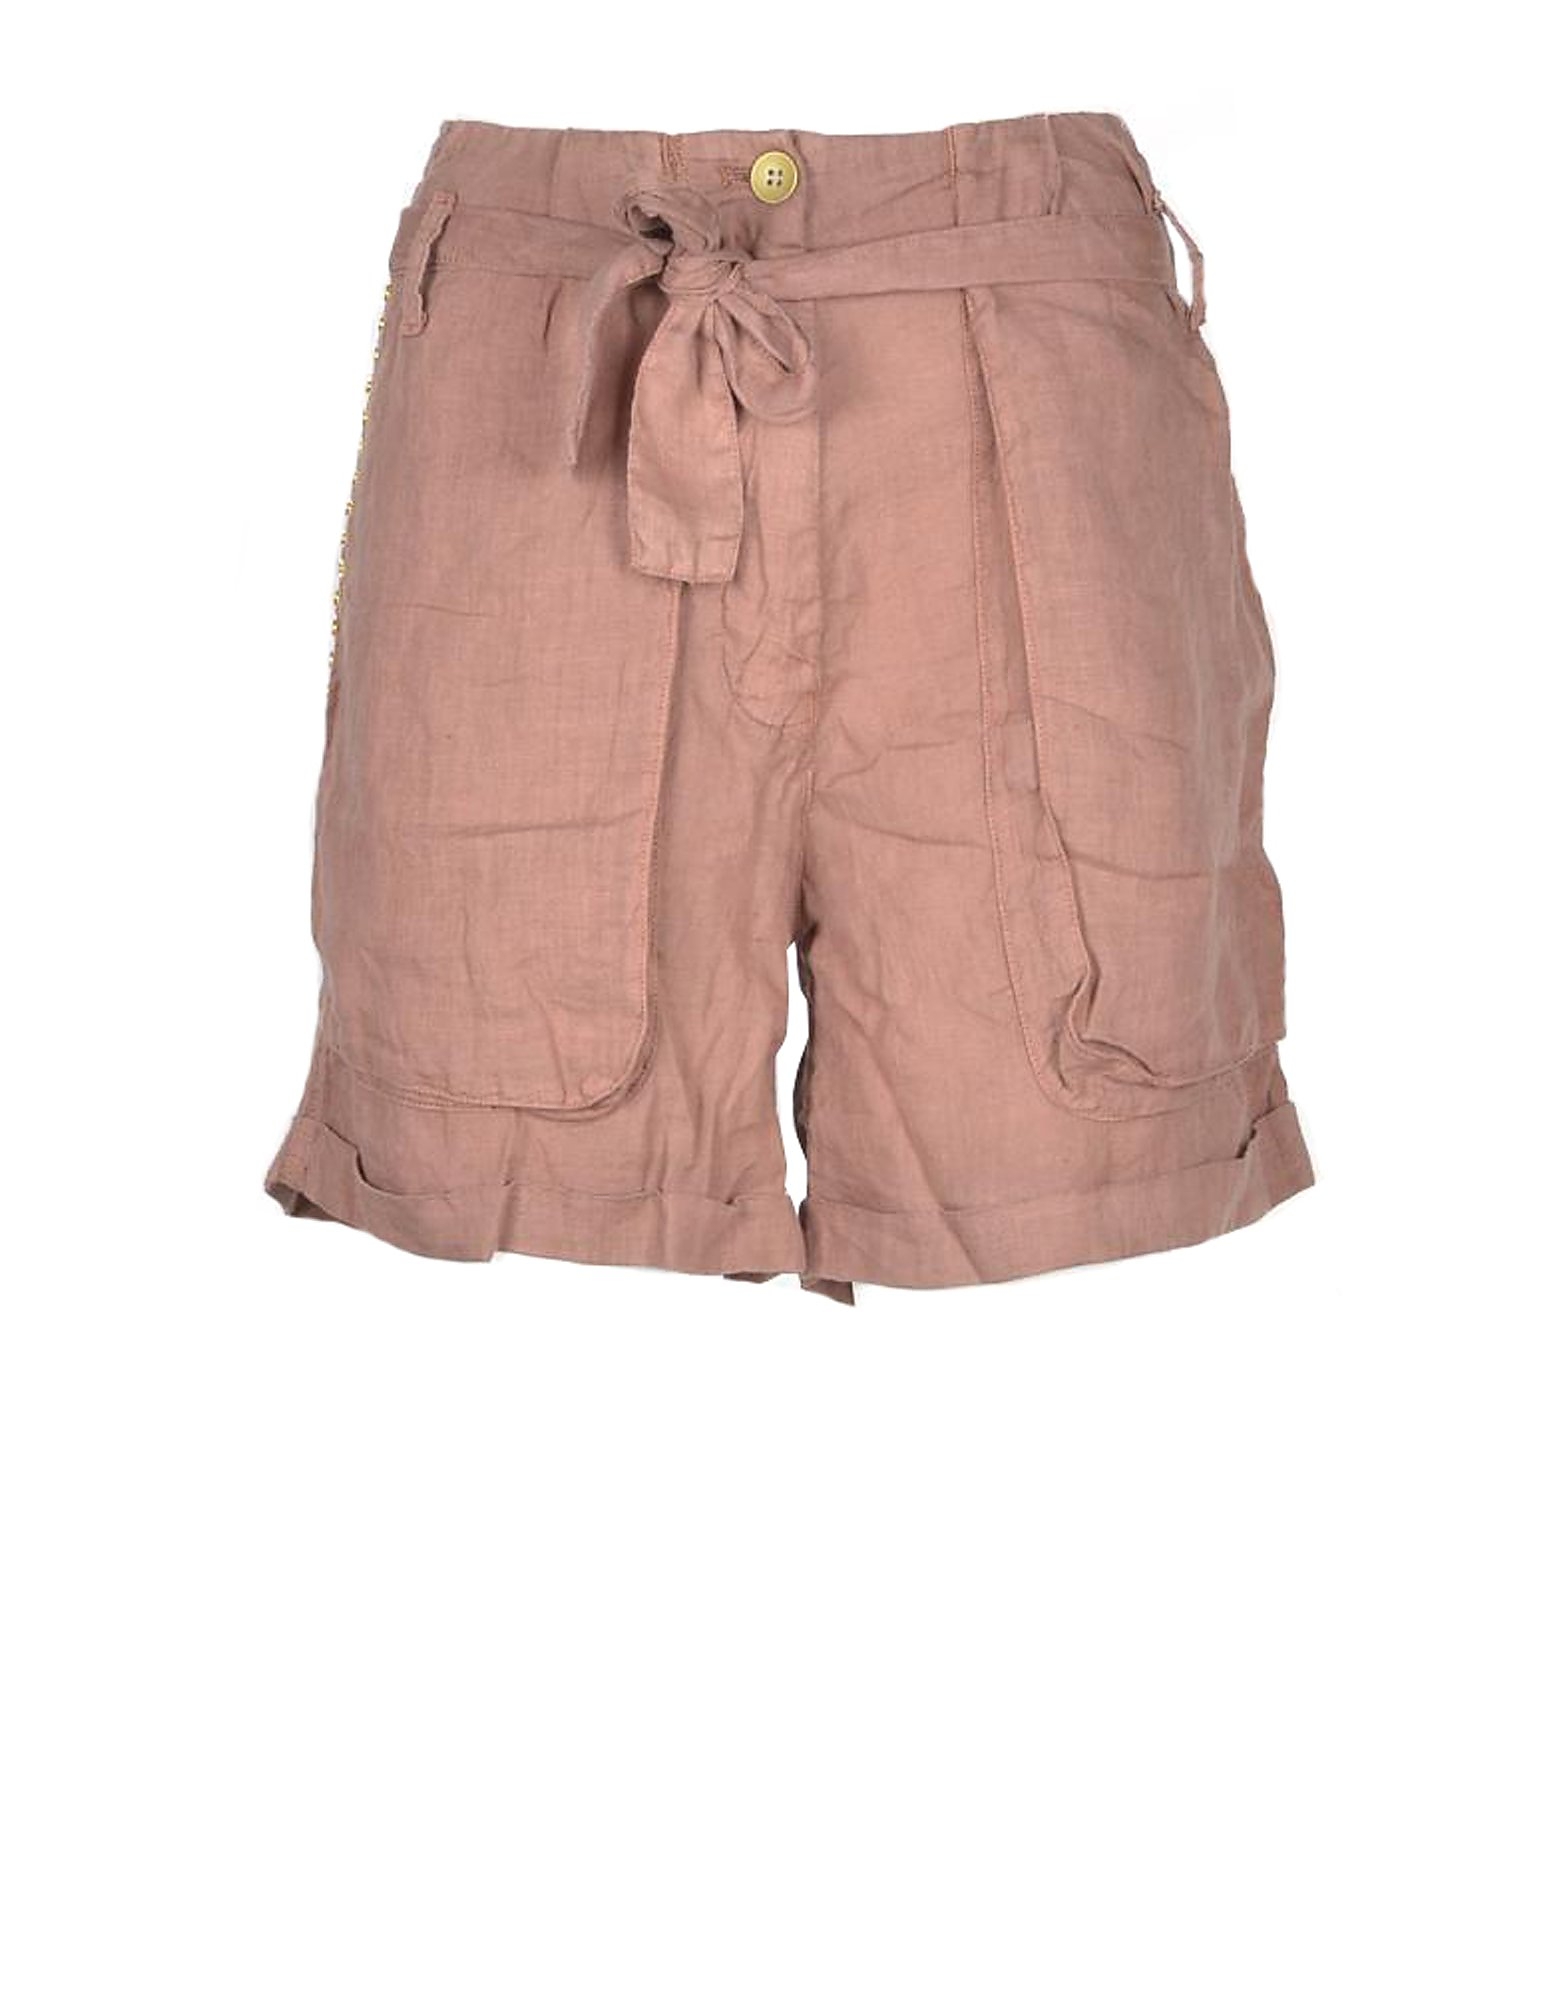 Mason's Shorts Women's Antique Pink Shorts